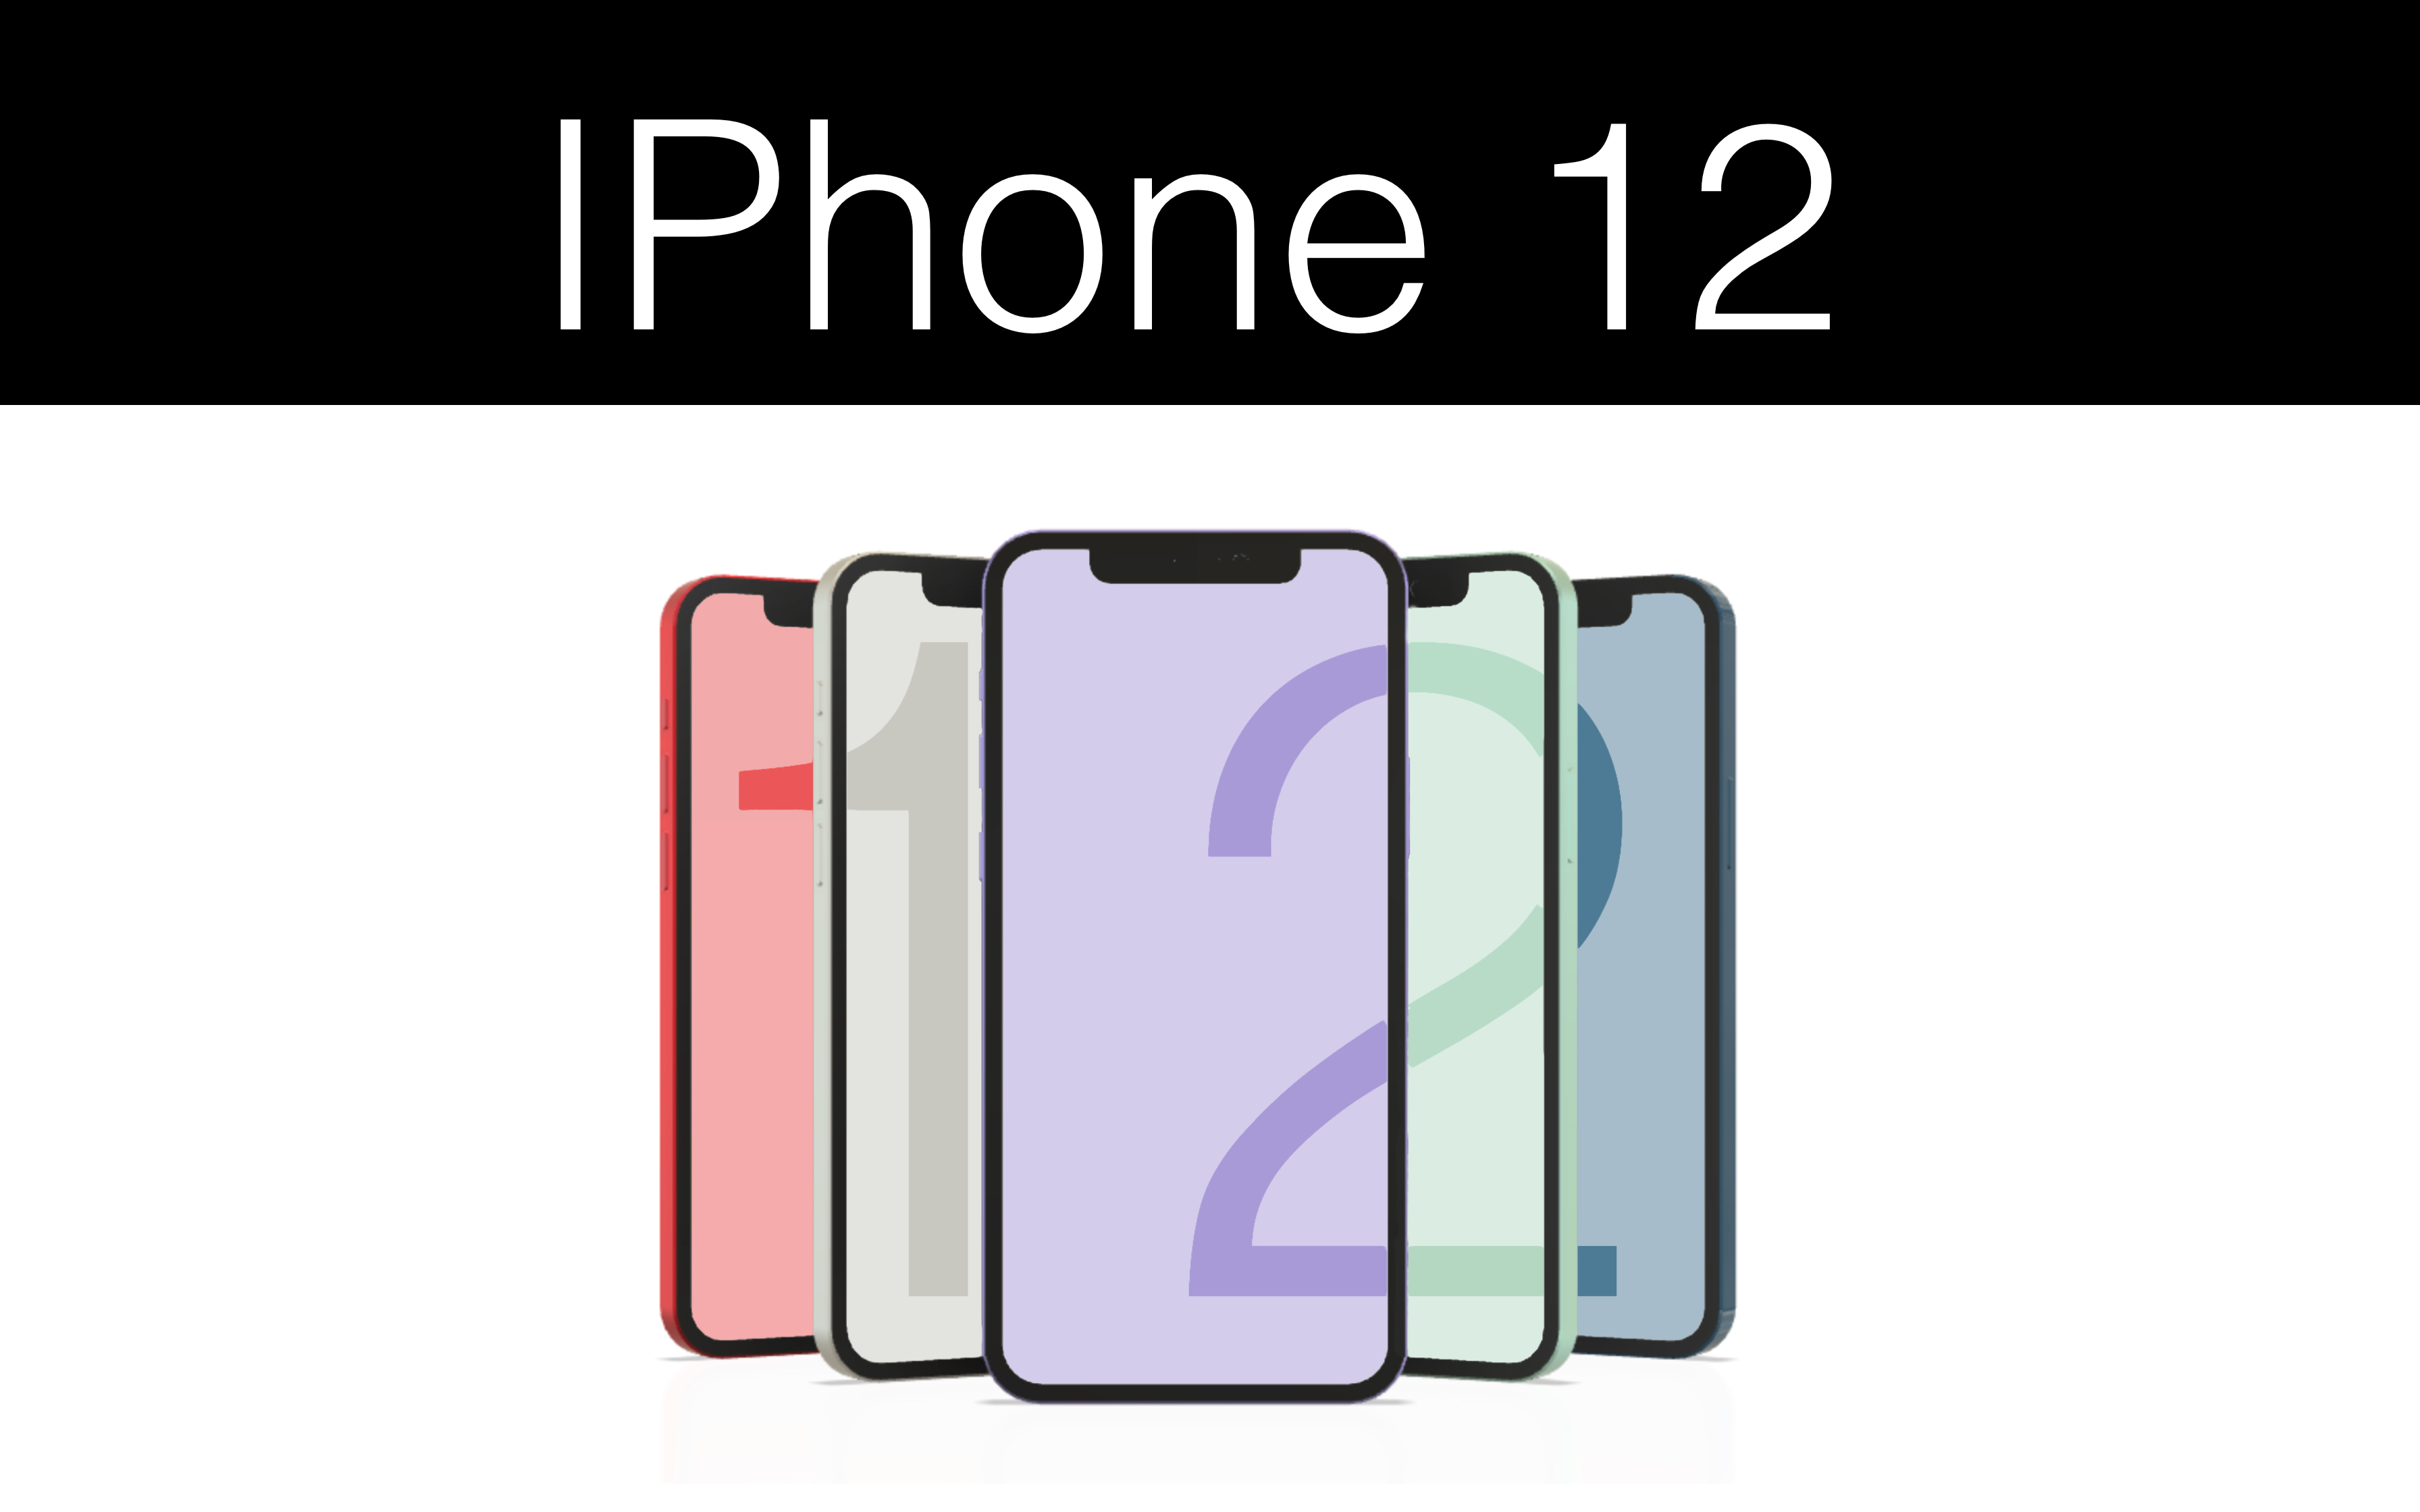 iPhone 12 Dummy Models (iPhone 12 Mini, iPhone 12, iPhone 12 Pro, iPhone 12 Pro Max)